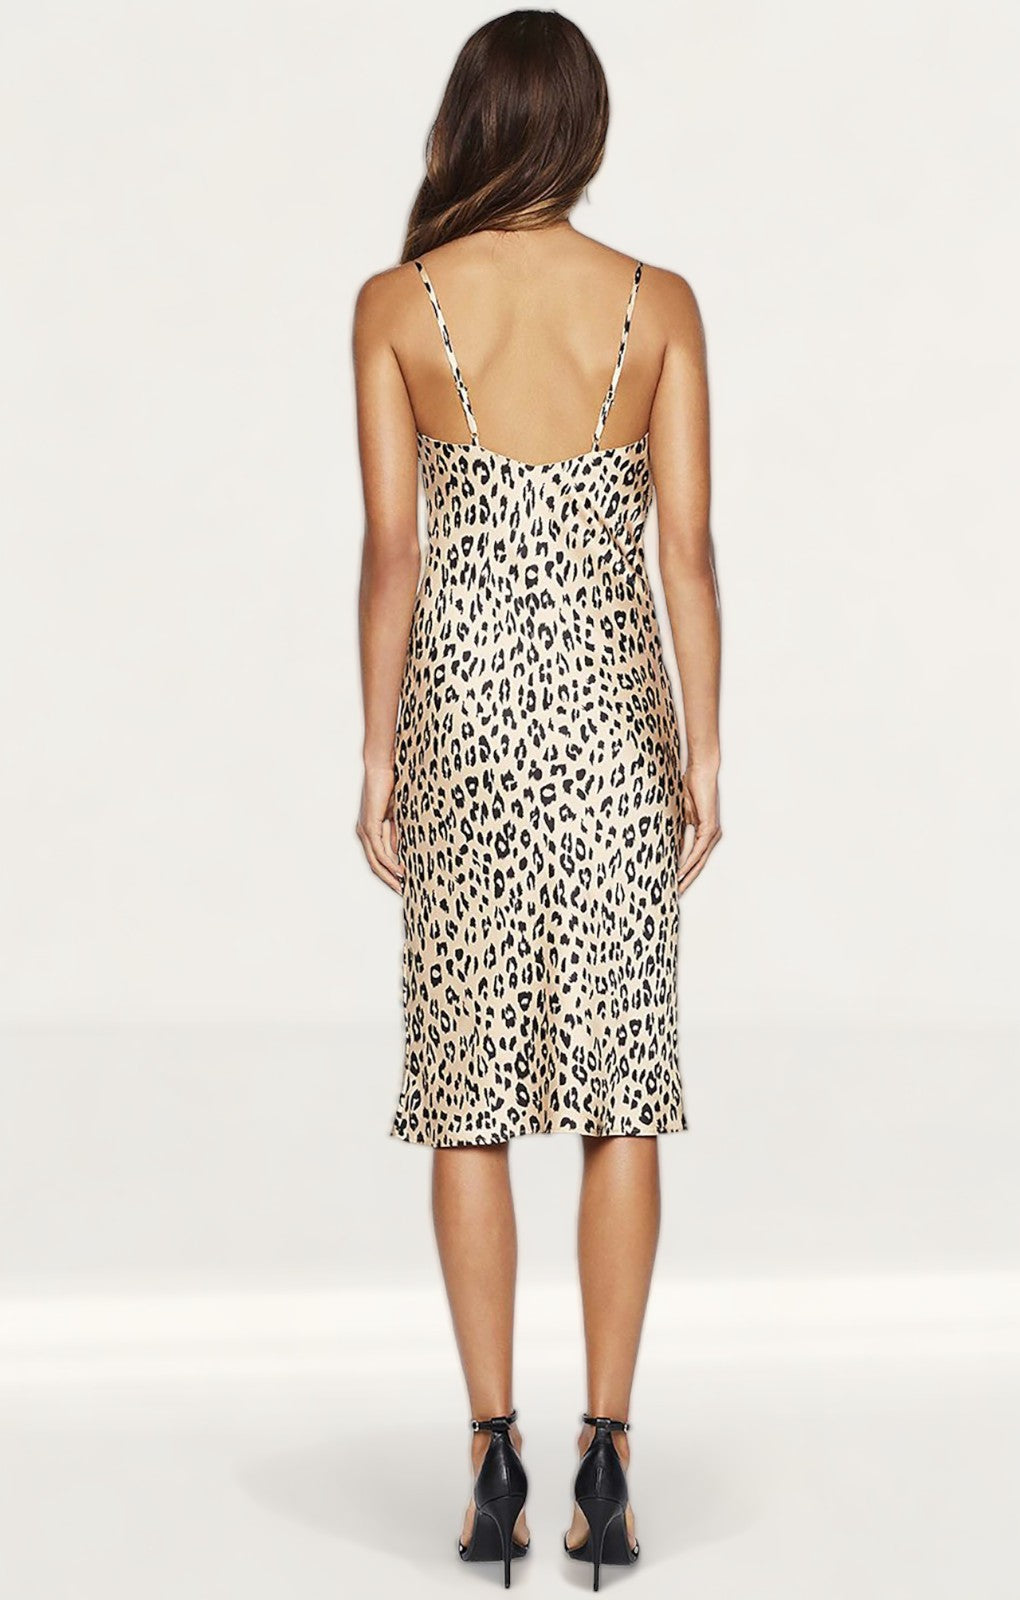 Bardot Leopard Print Slip Dress product image